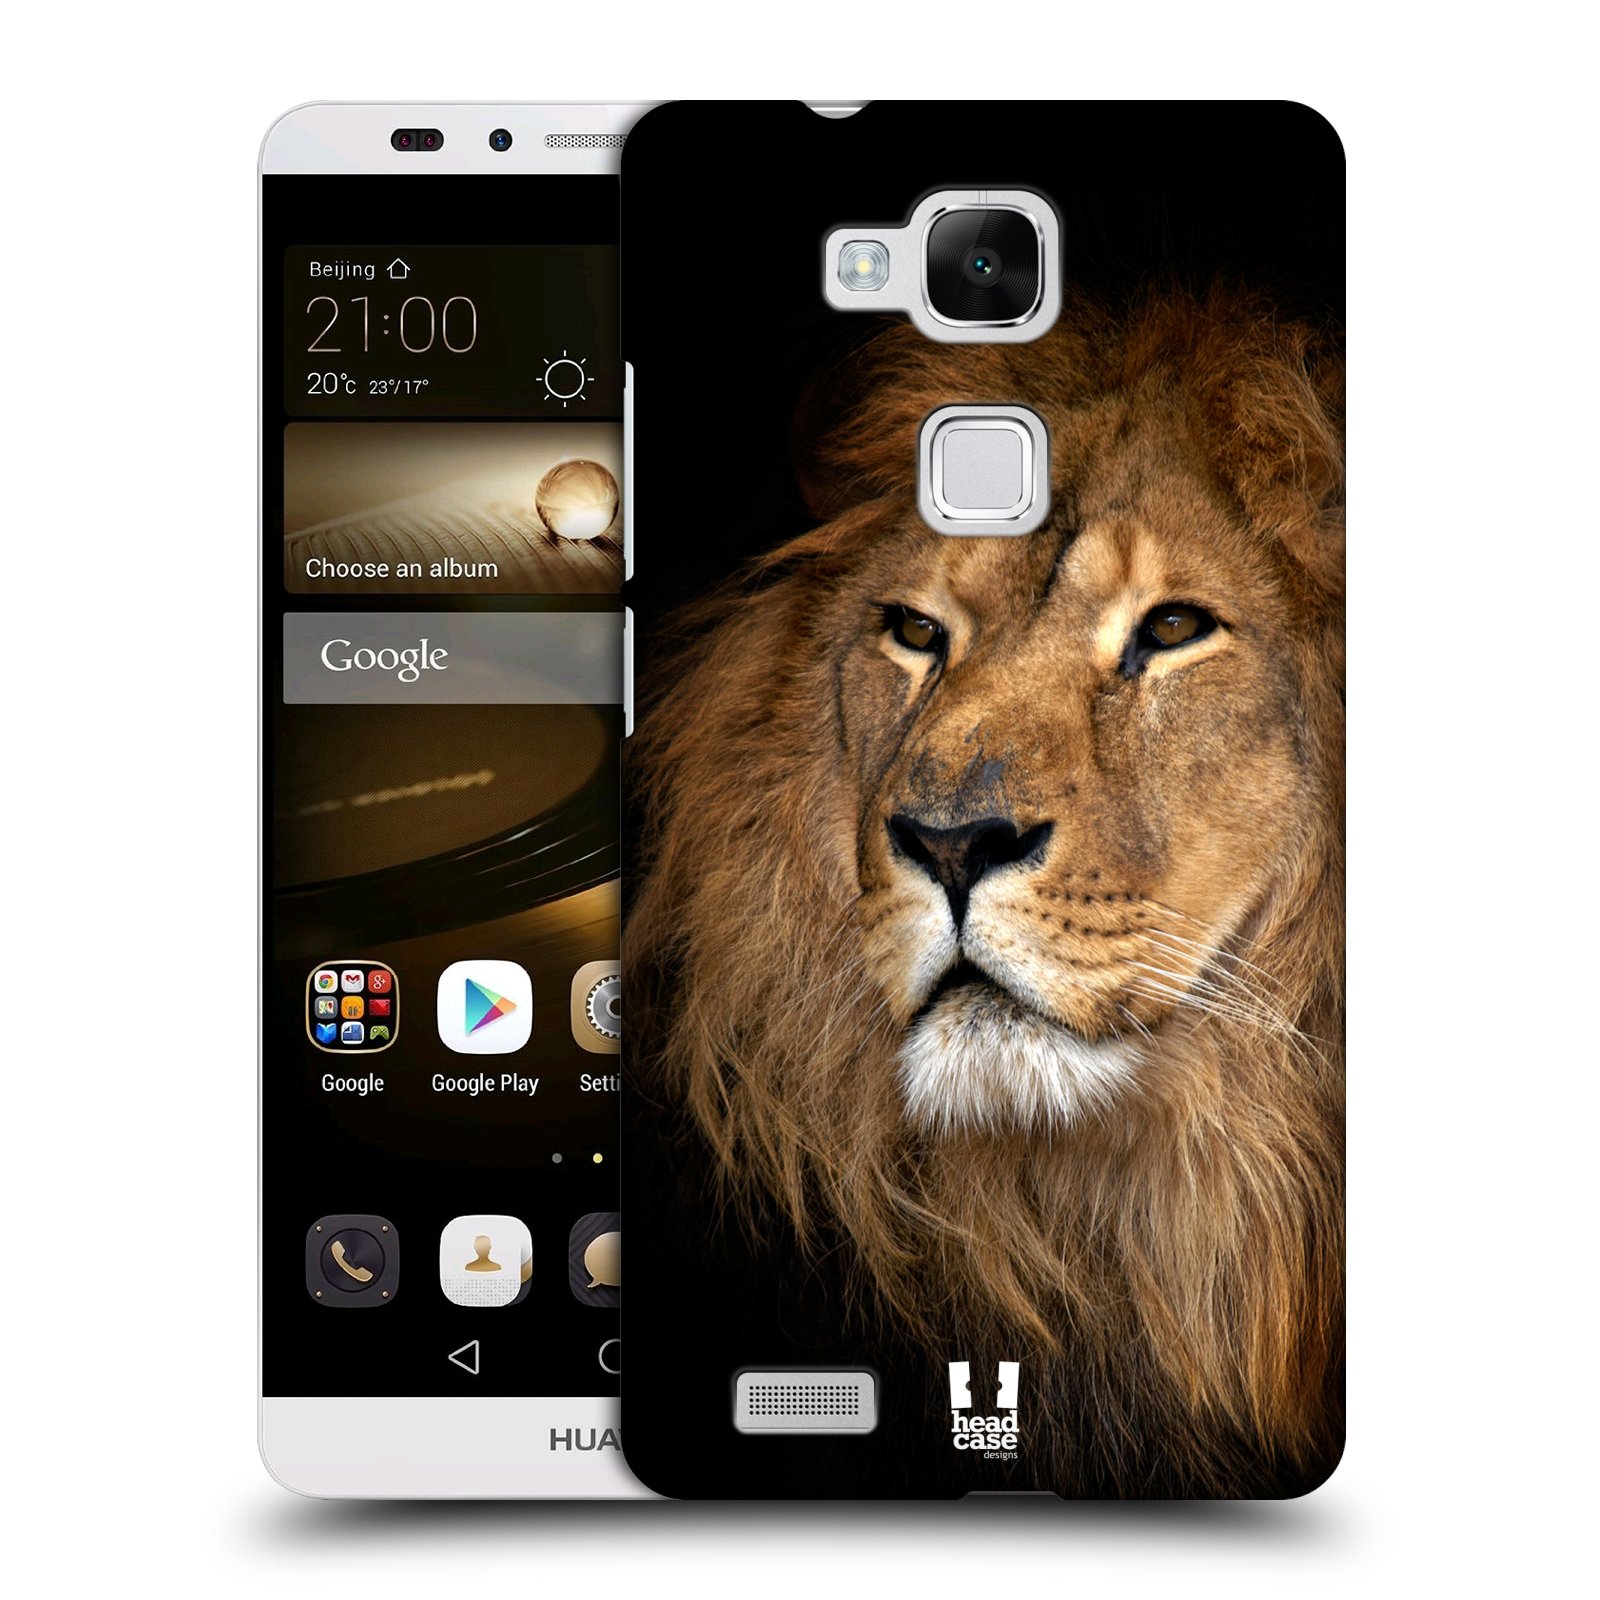 HEAD CASE plastový obal na mobil Huawei Mate 7 vzor Divočina, Divoký život a zvířata foto LEV KRÁL ZVÍŘAT